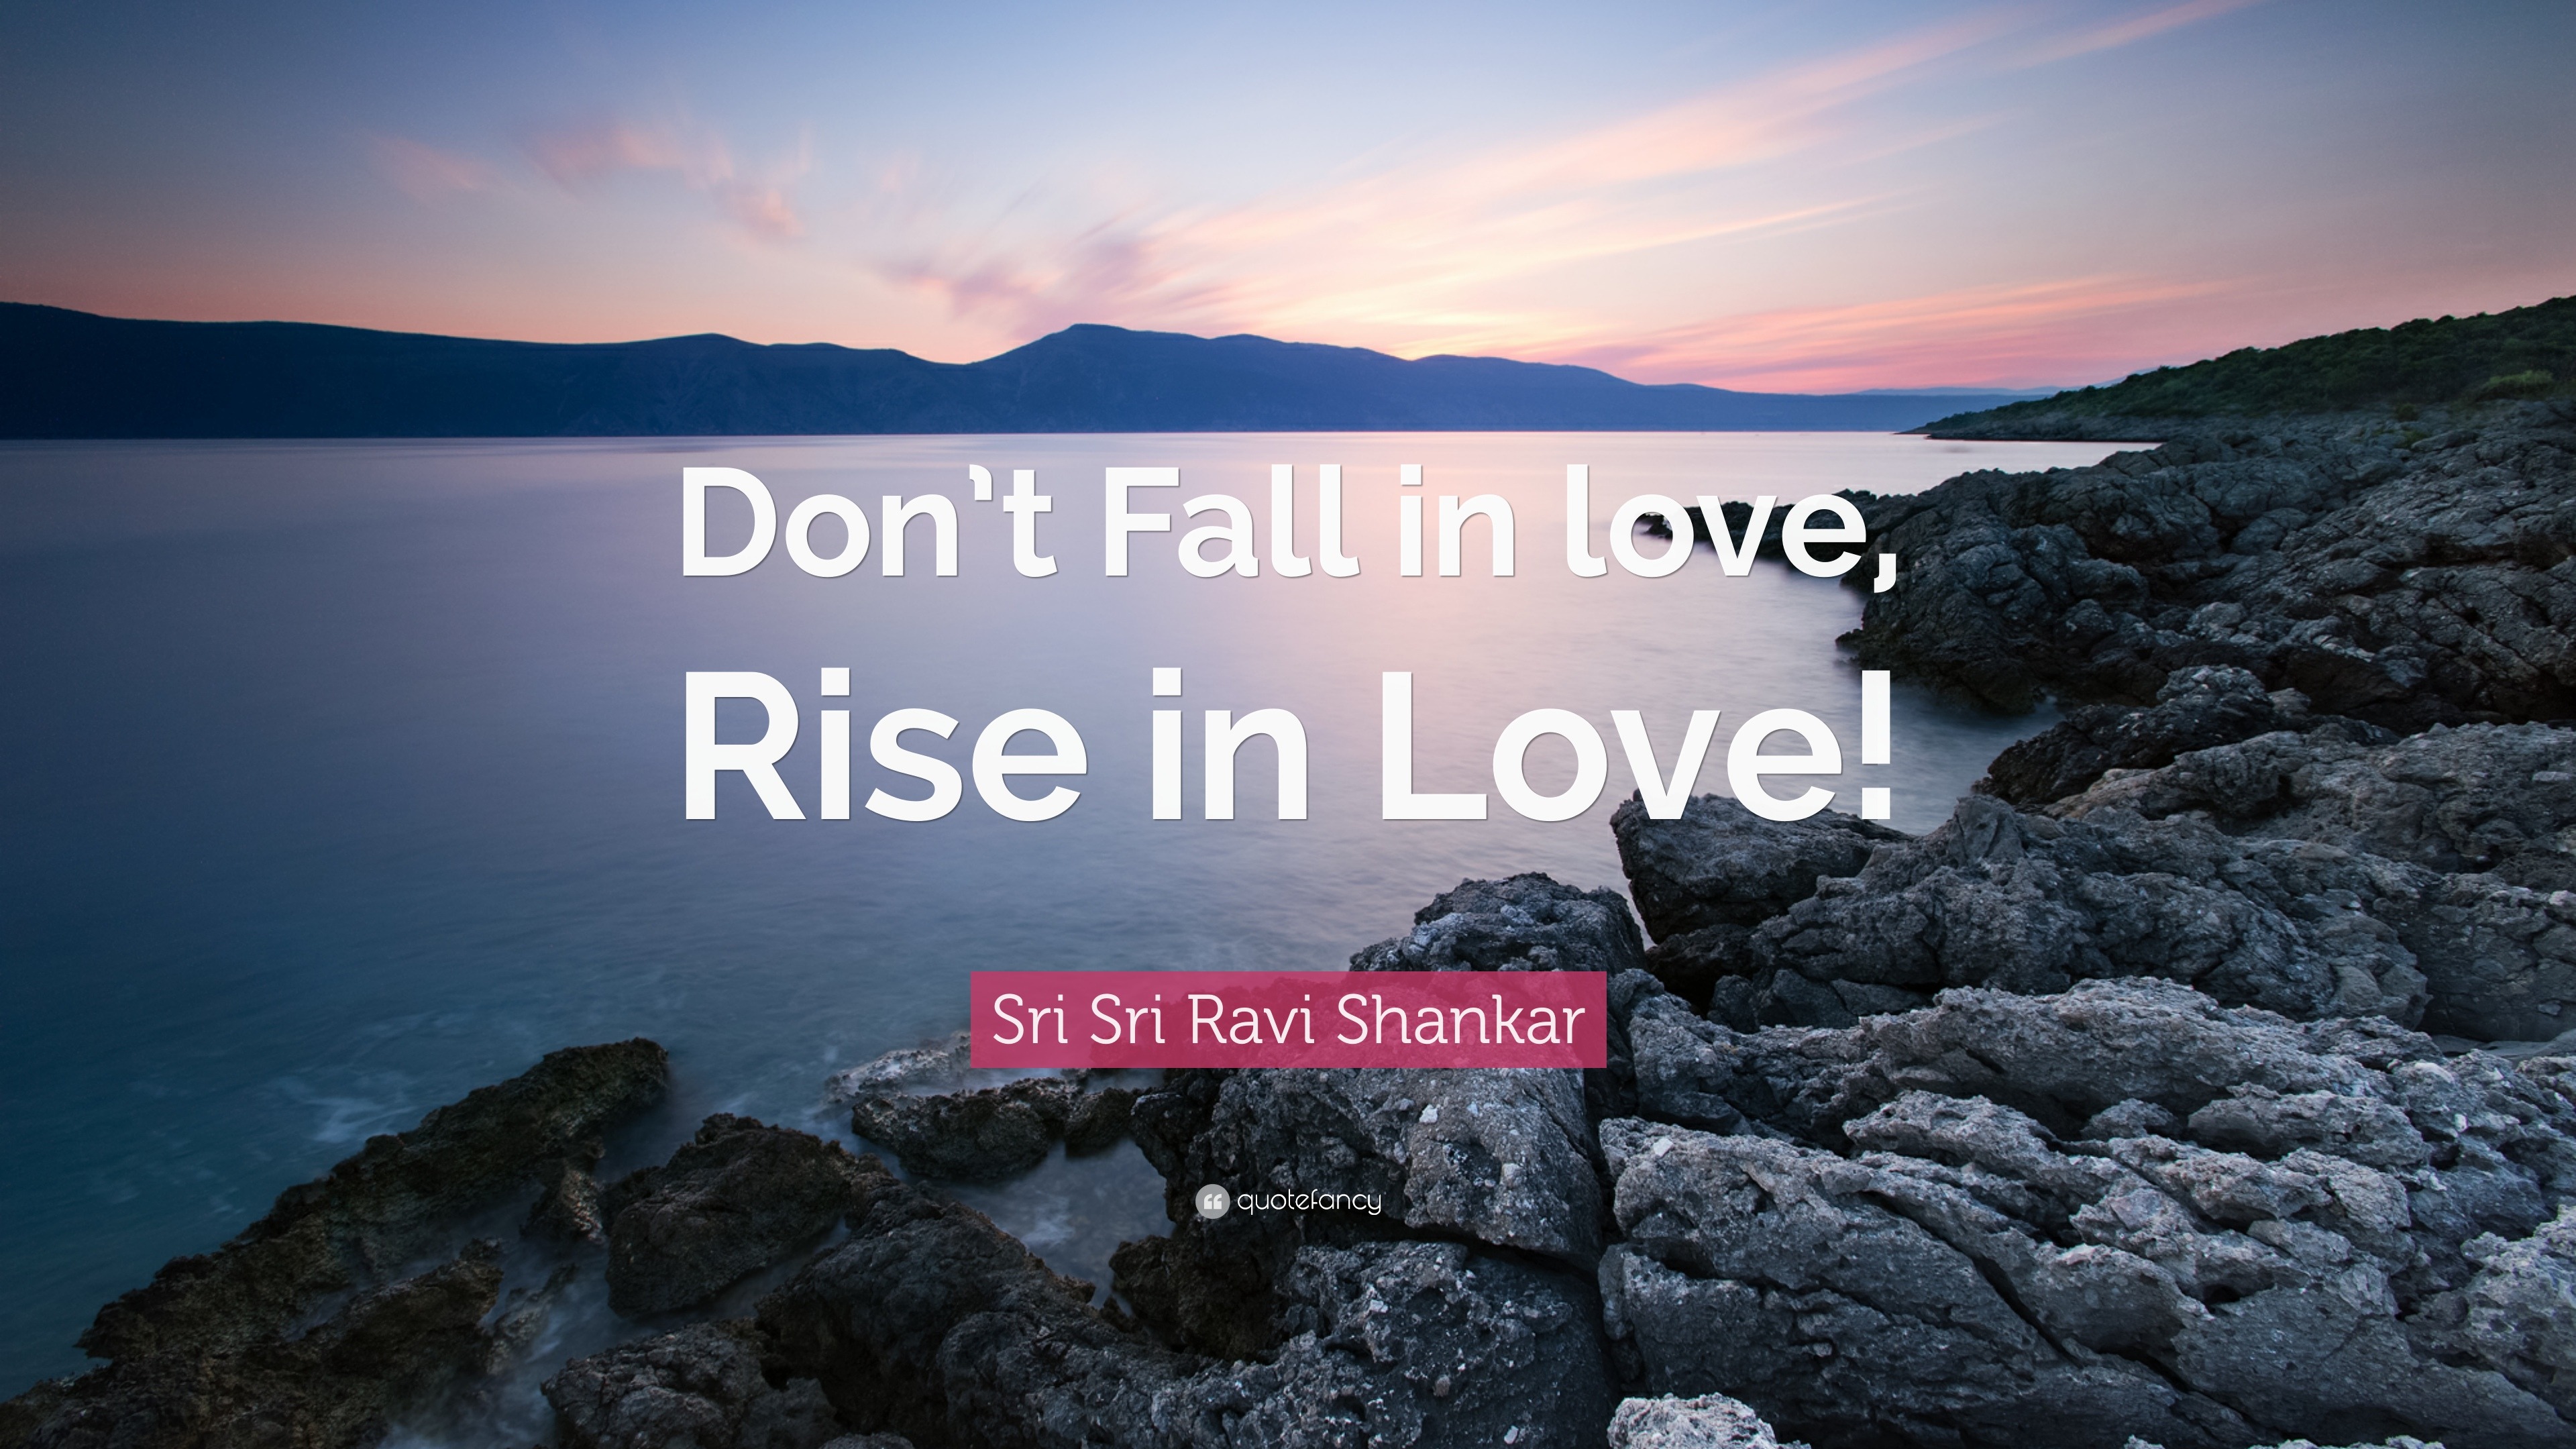 Sri Sri Ravi Shankar Quote: “Don't Fall In Love, Rise In Love!”